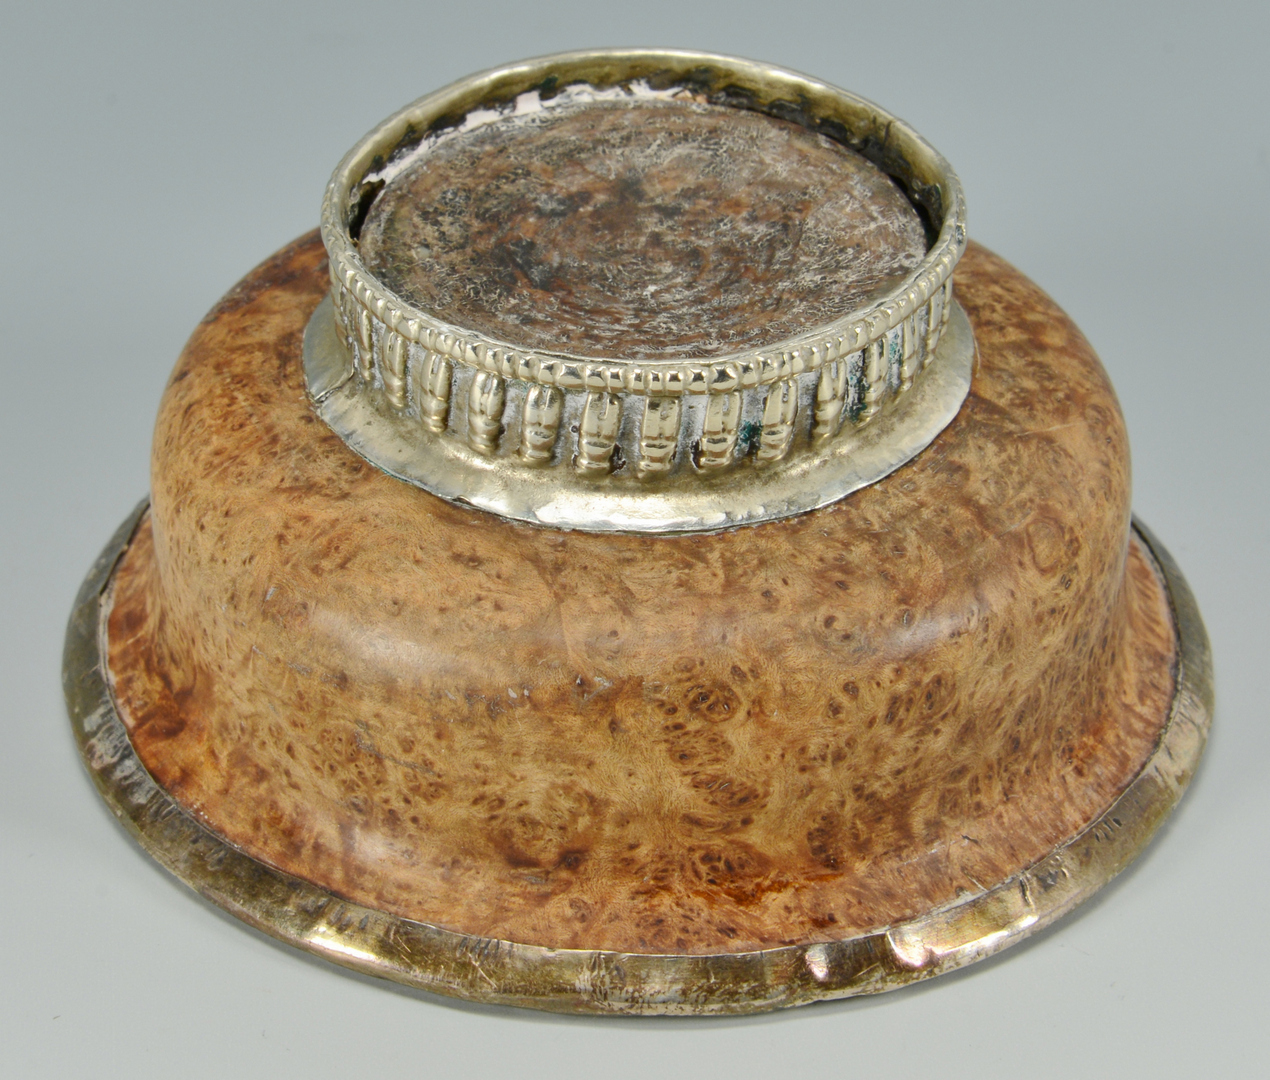 Lot 3088193: Silver mounted burled Mazer Bowl